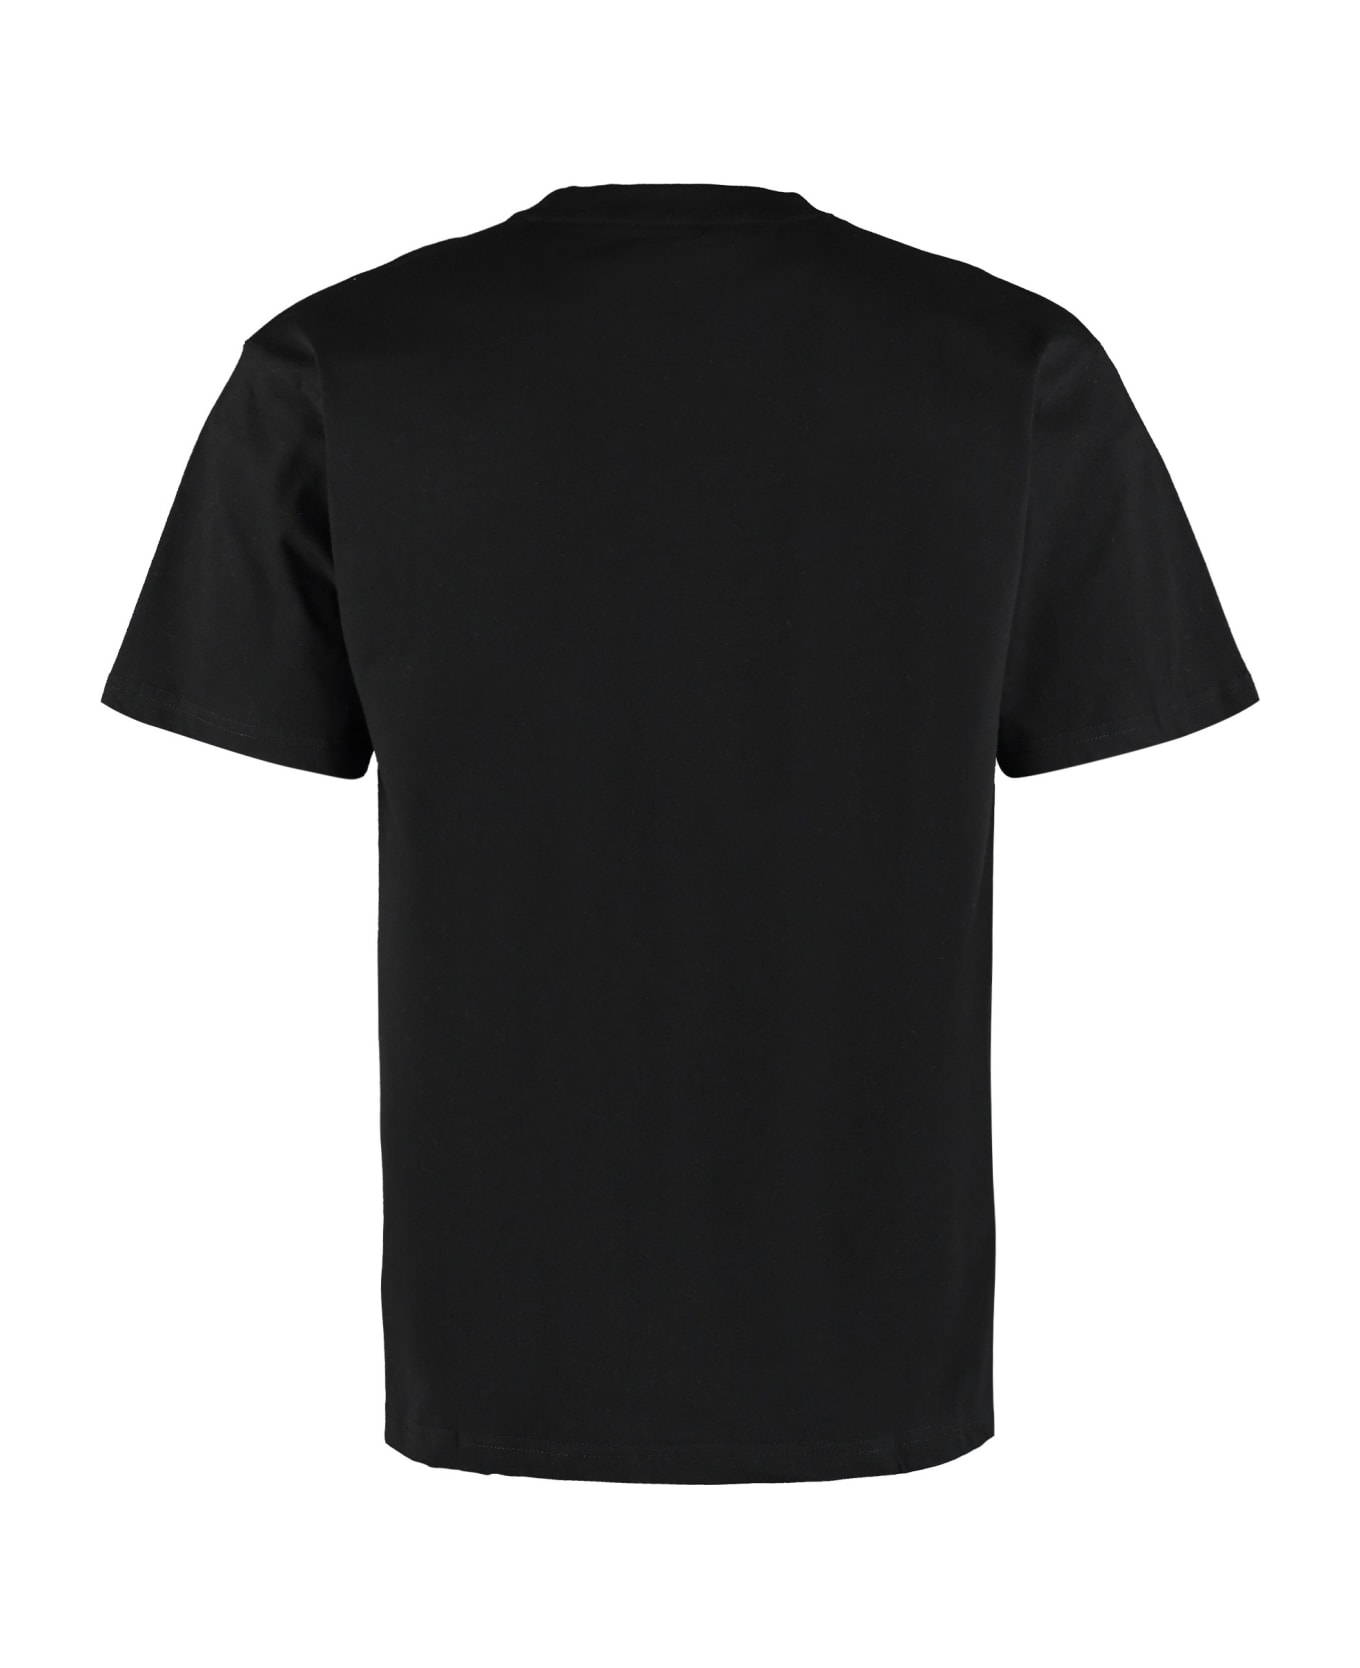 Market Printed Cotton T-shirt - black